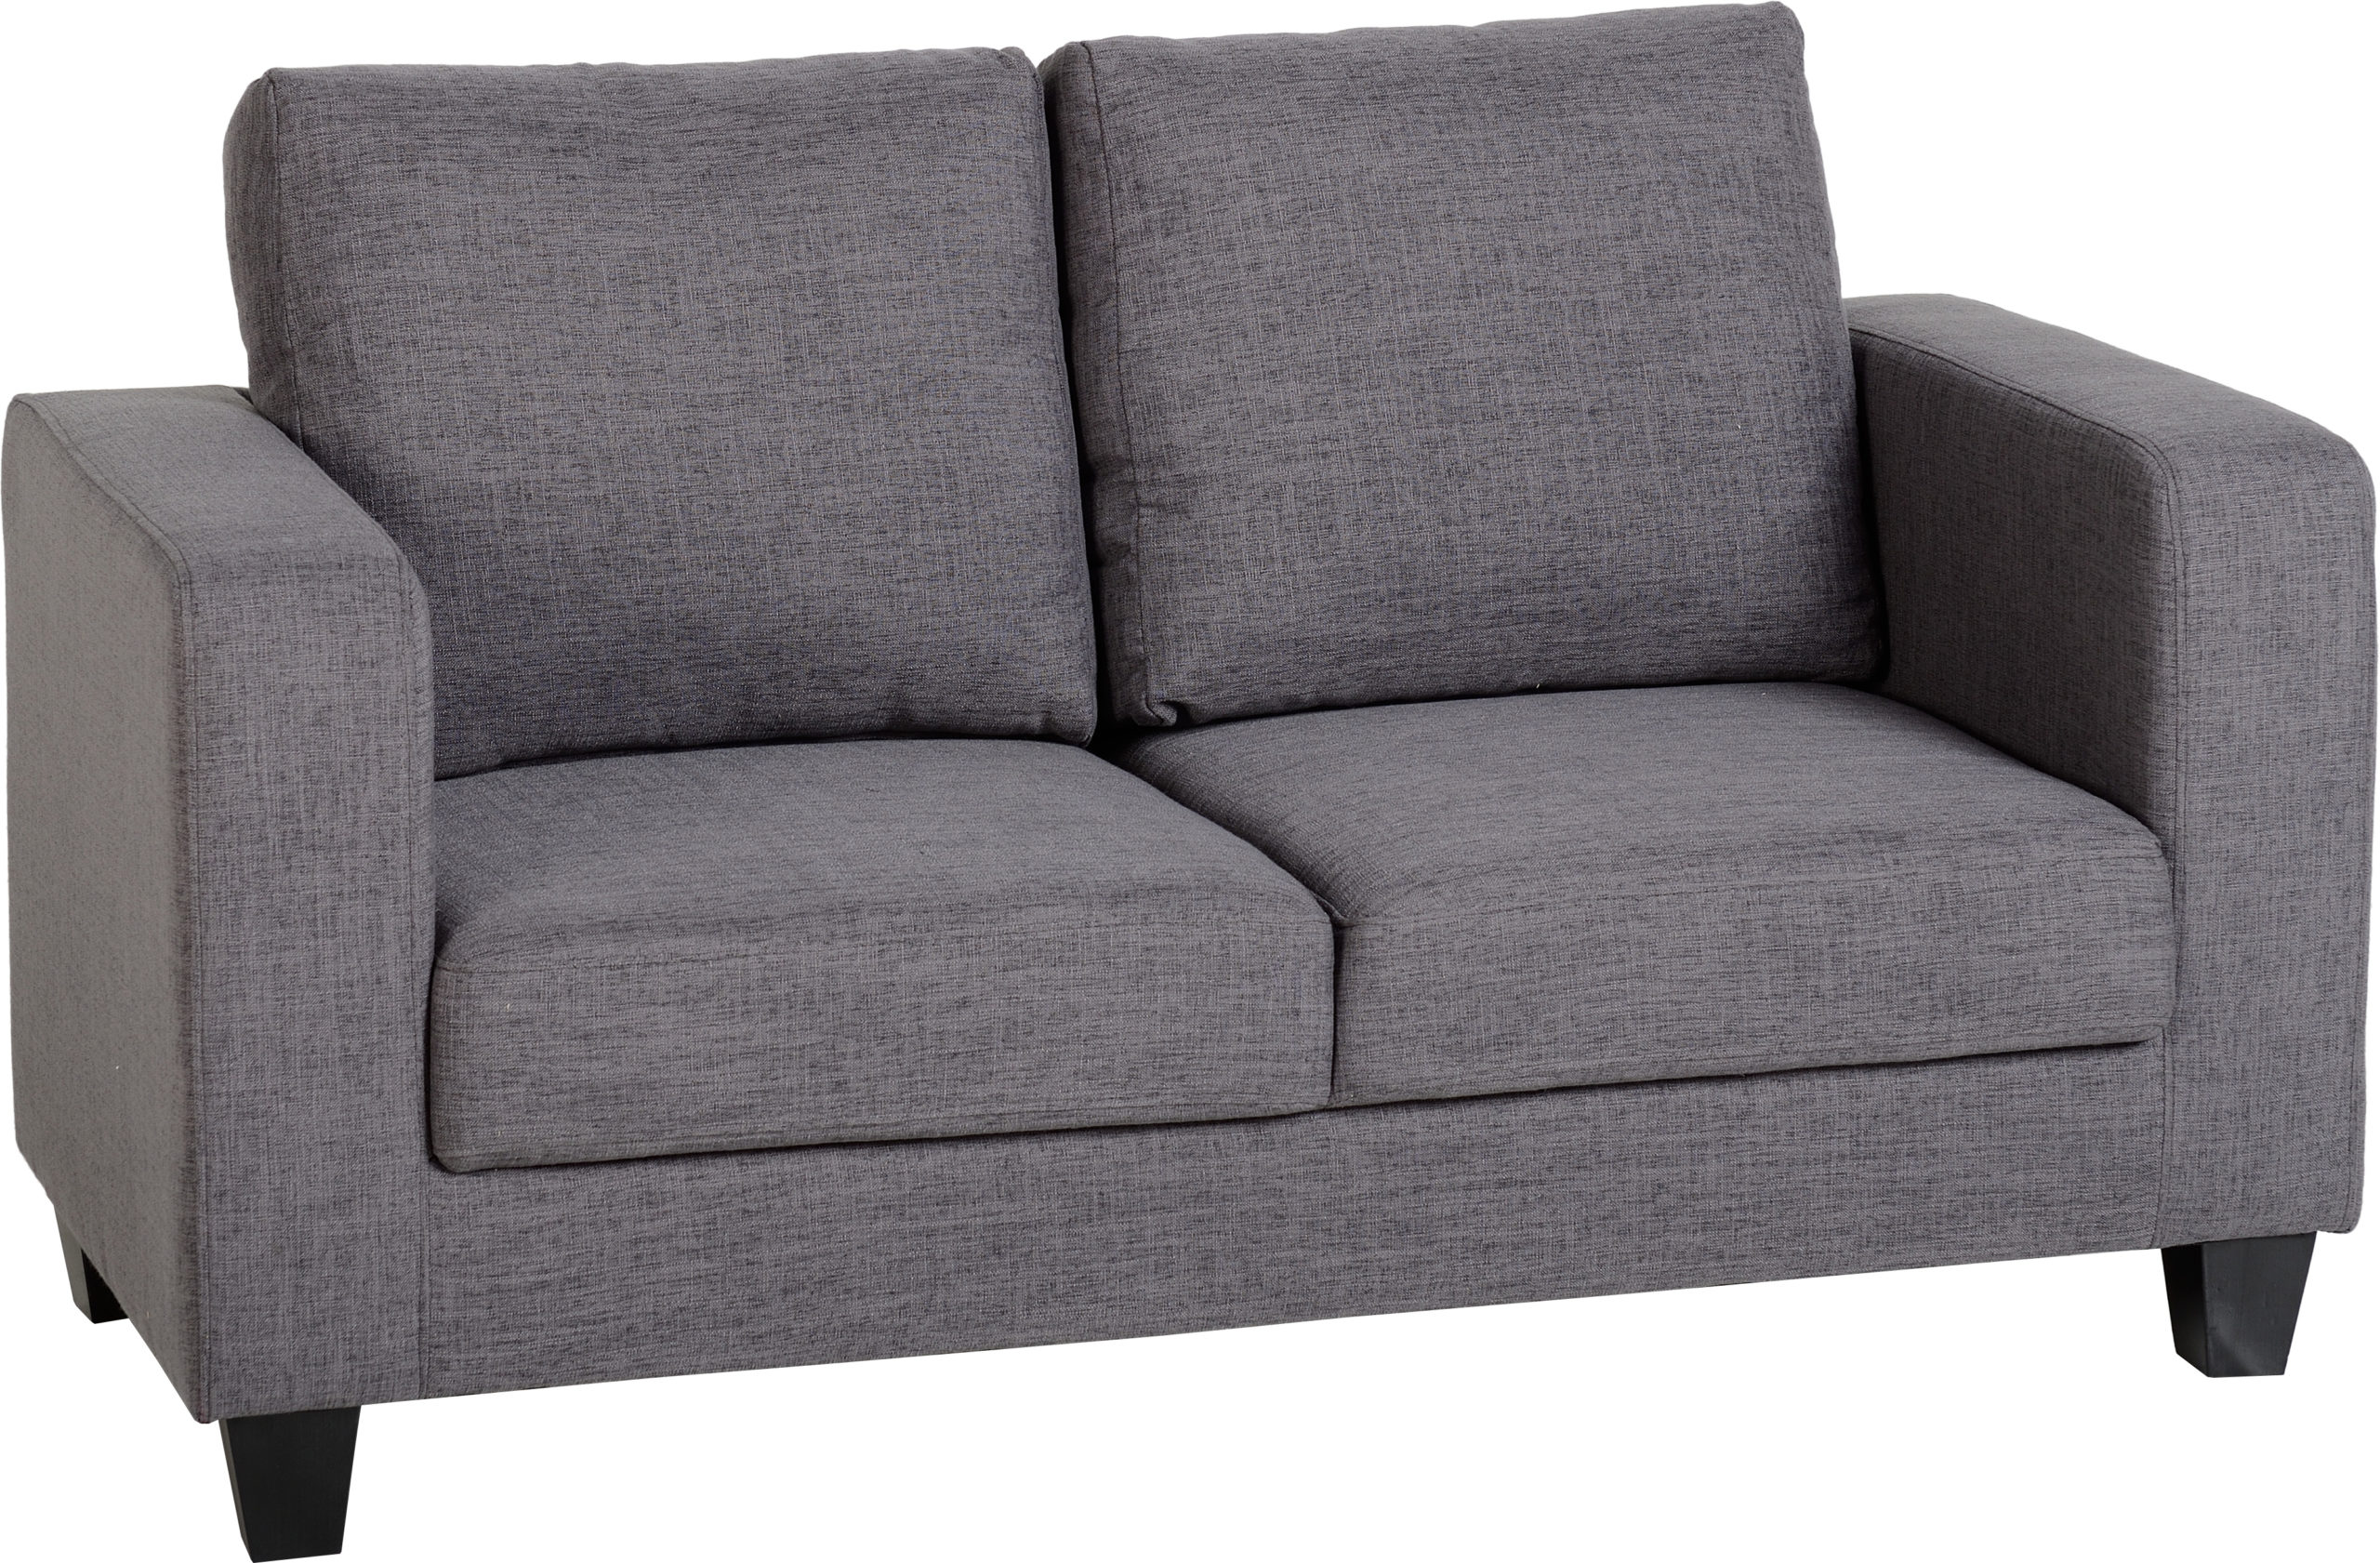 Tempo Two Seater Sofa-in-a-Box - Grey Fabric